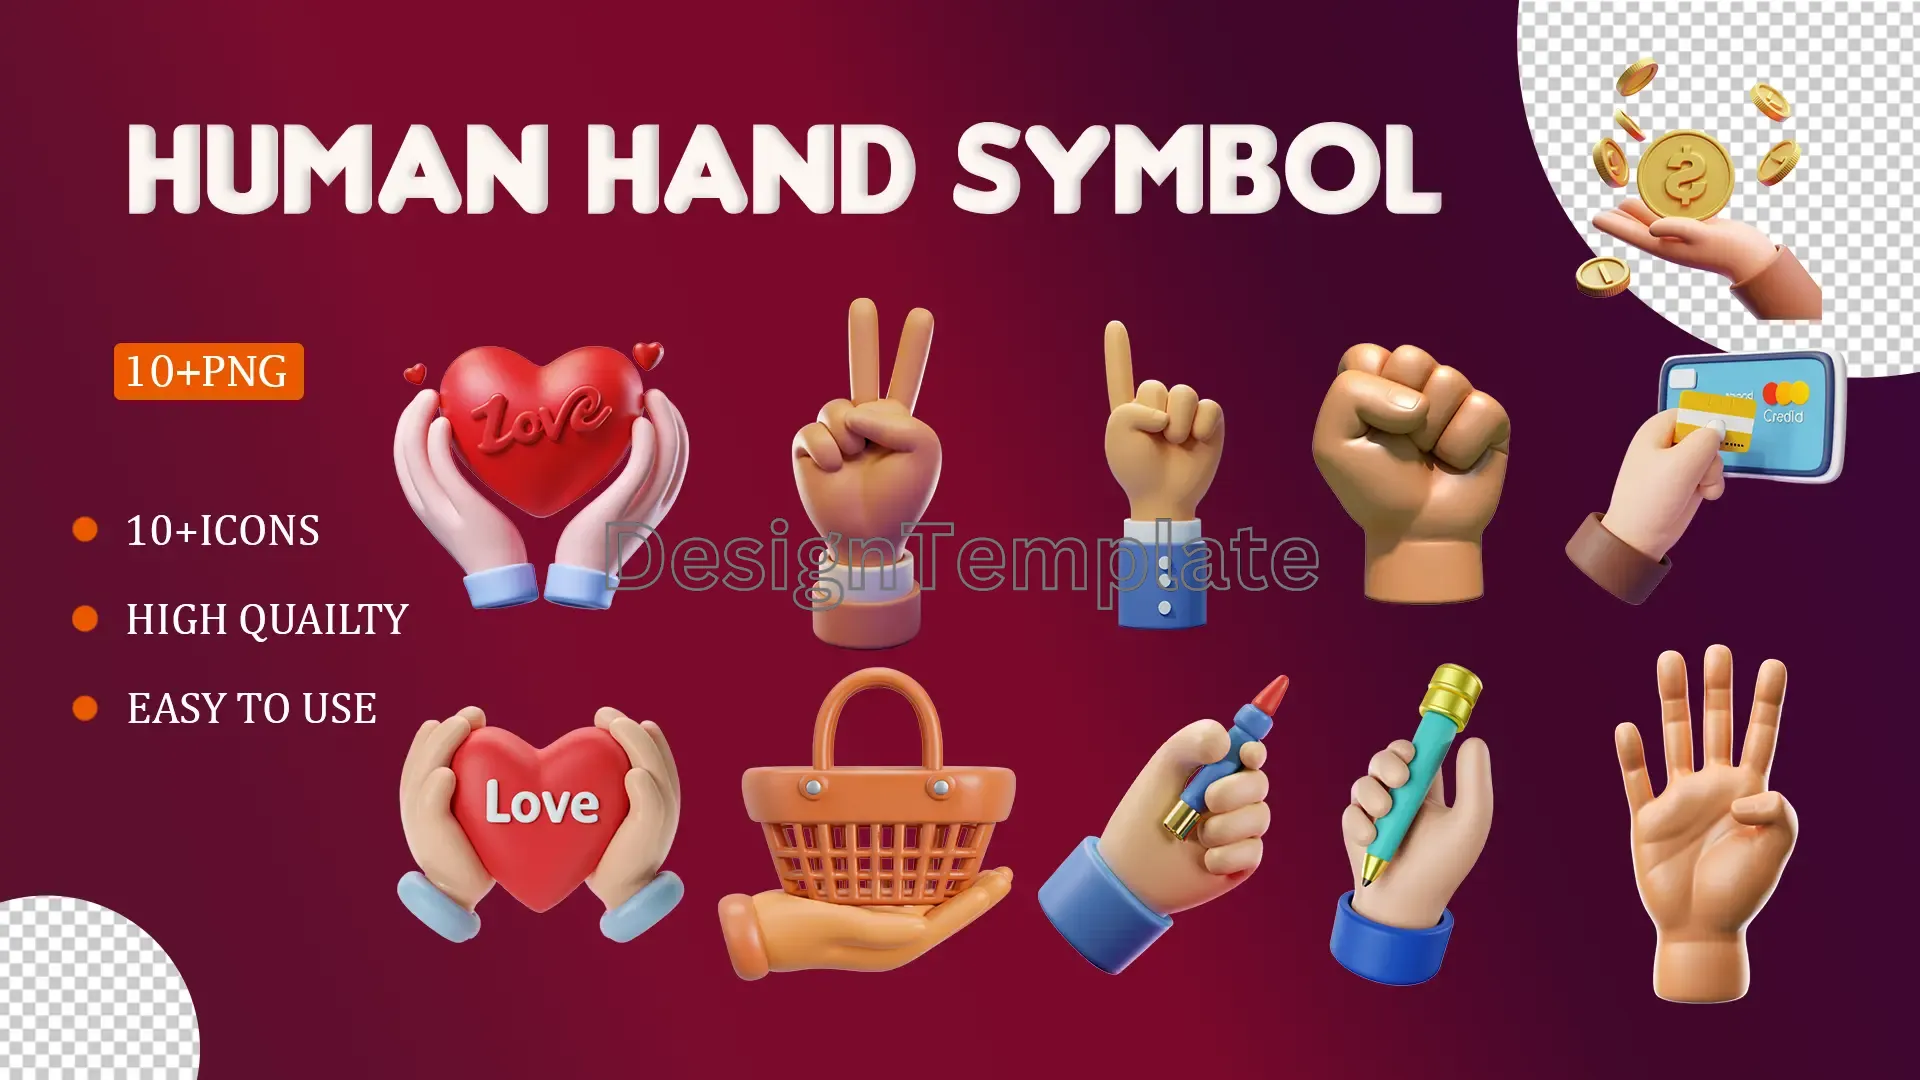 Human Hand Symbol 3D Elements Pack image